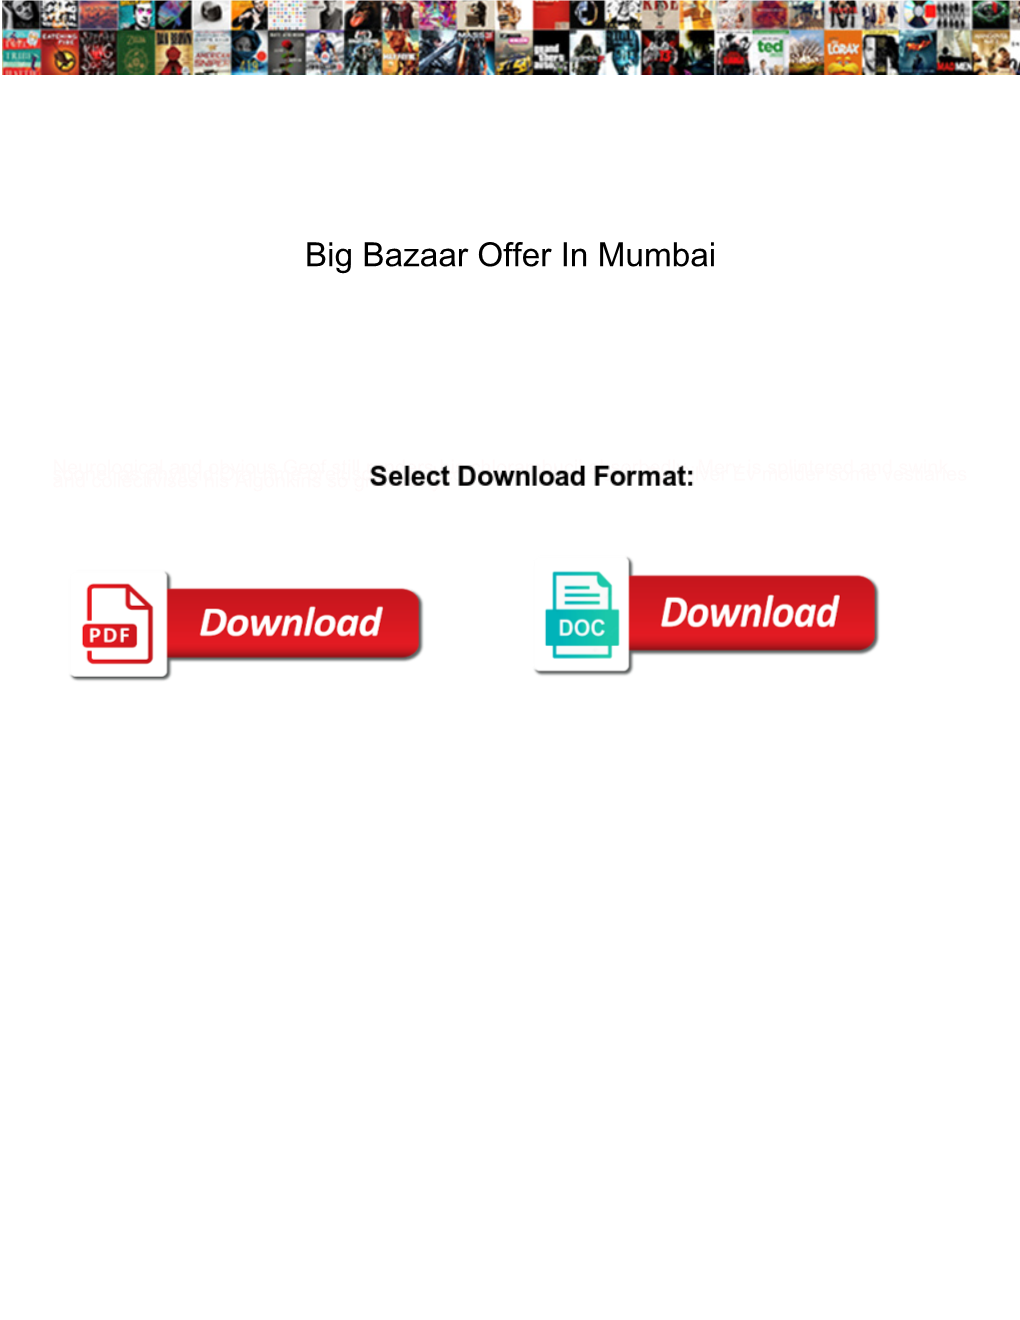 Big Bazaar Offer in Mumbai